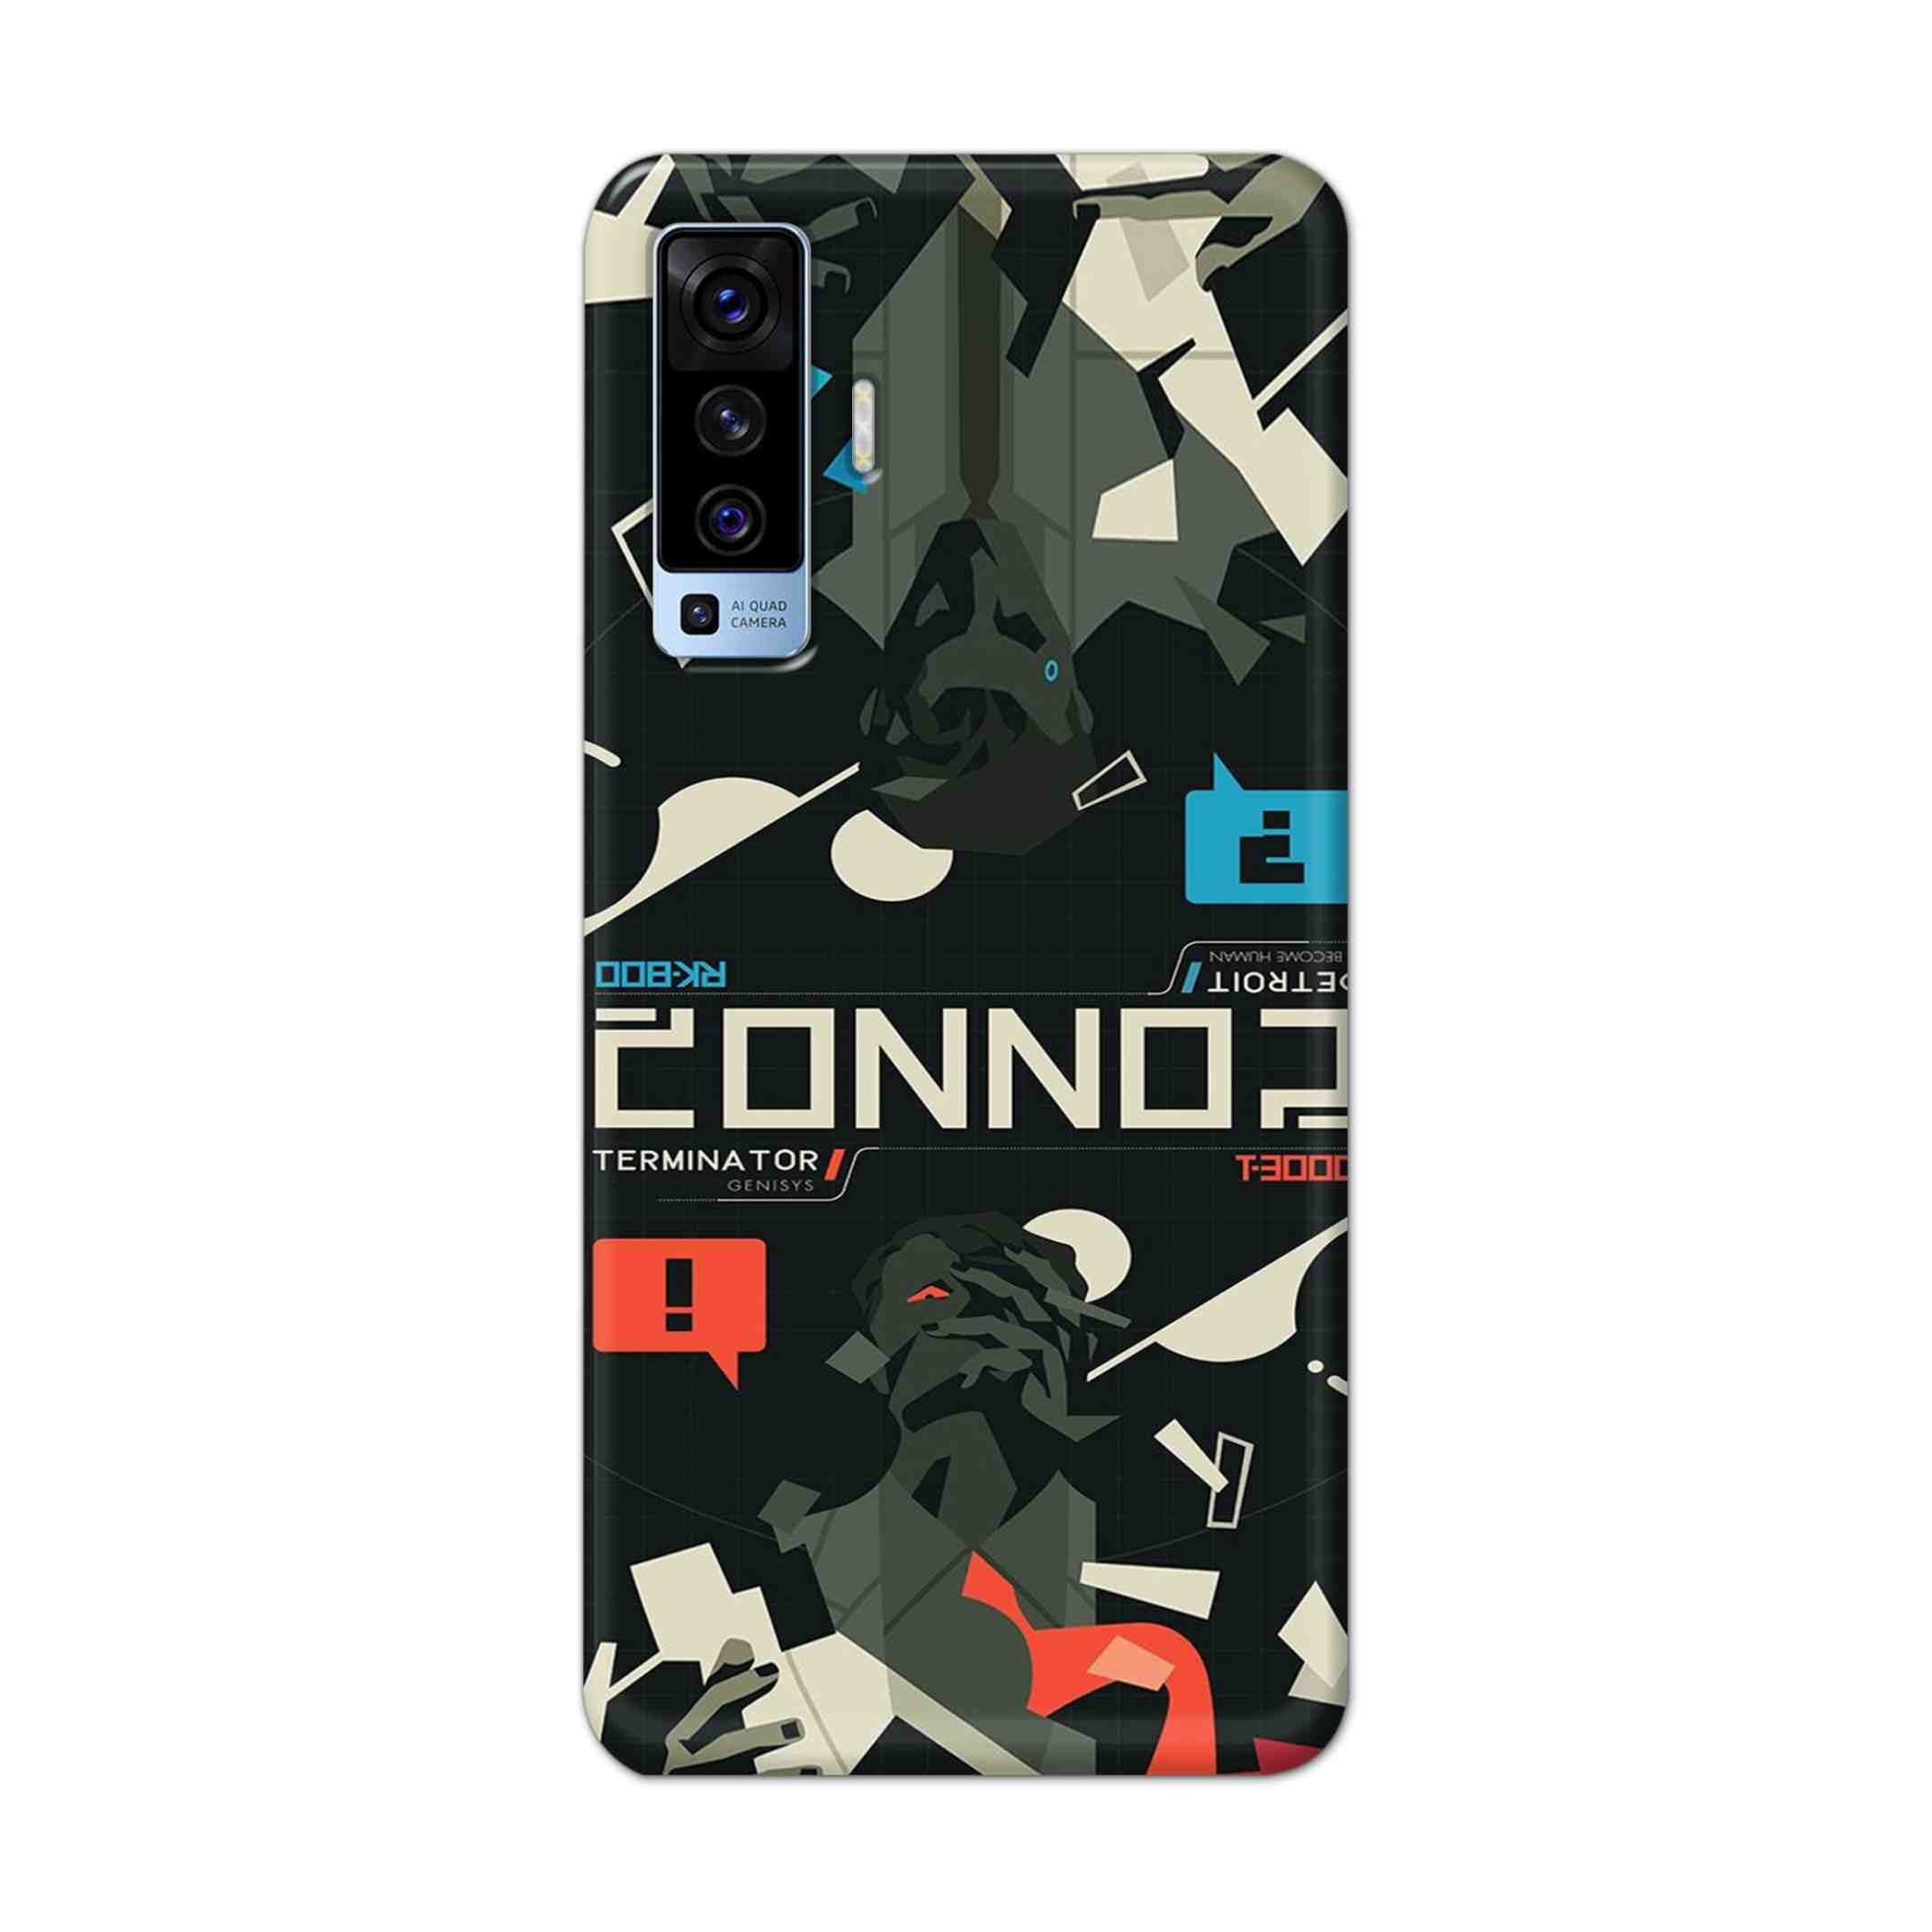 Buy Terminator Hard Back Mobile Phone Case Cover For Vivo X50 Online